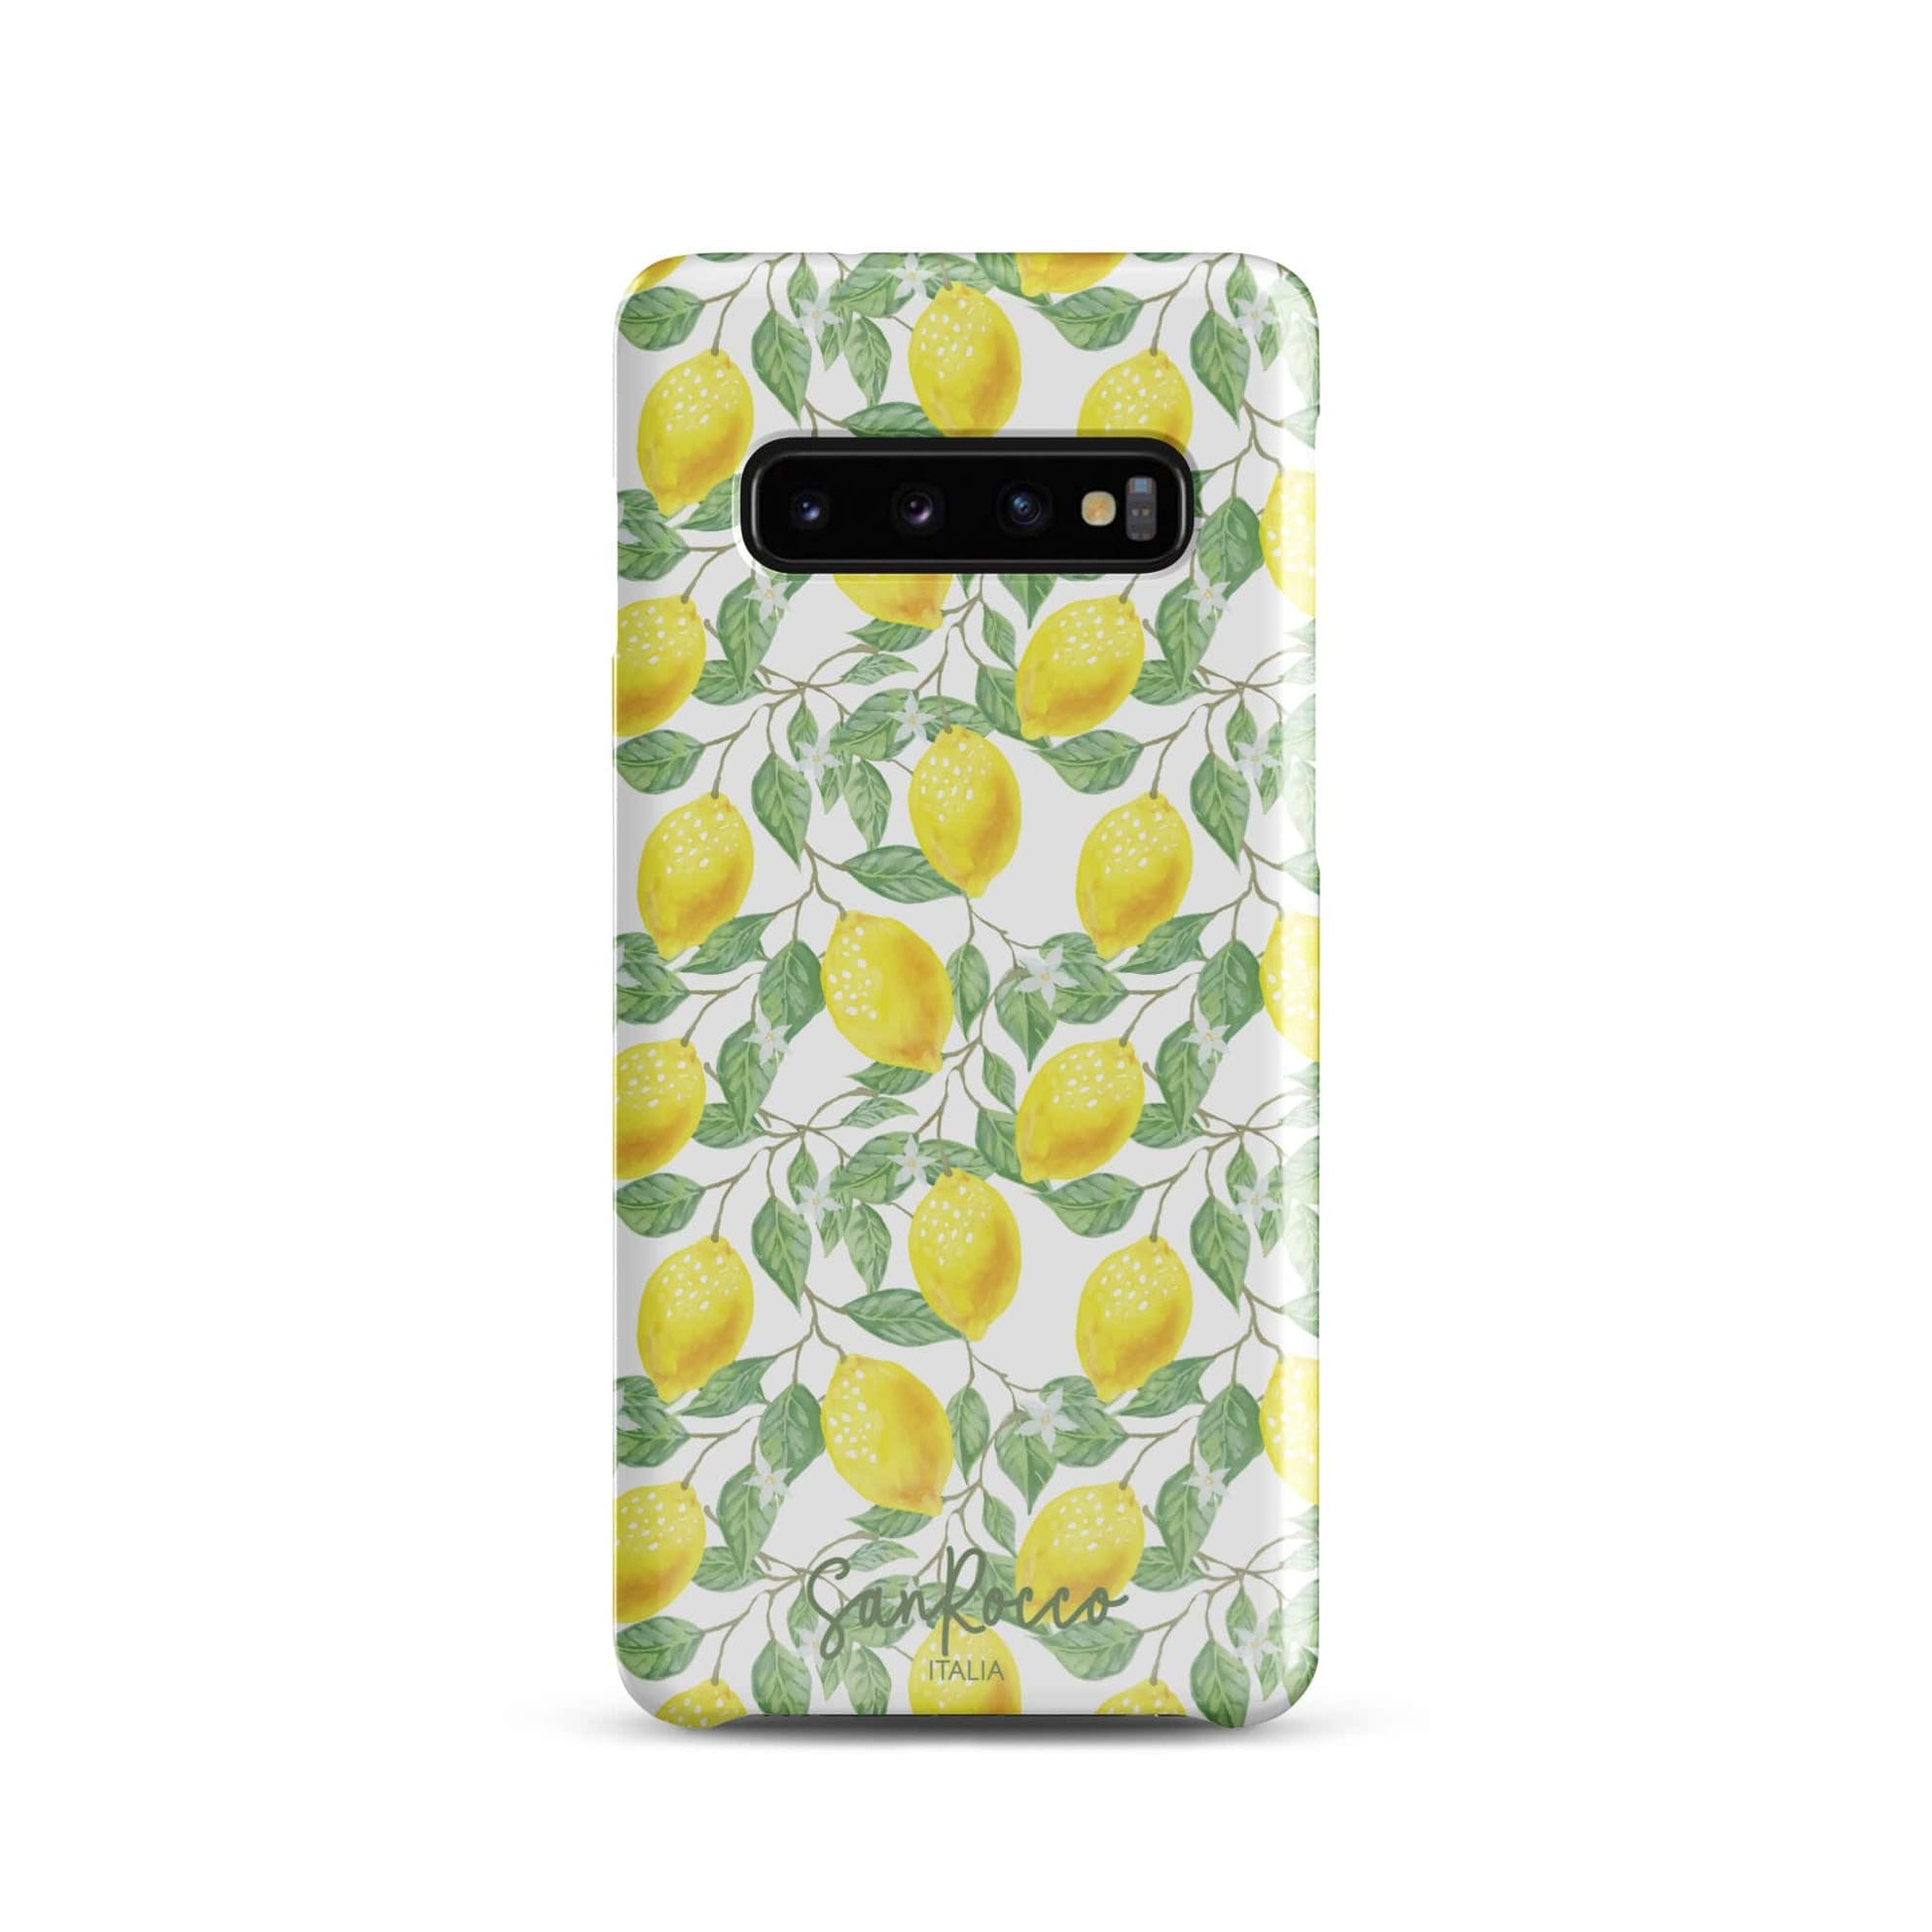 Limoncello Luxe Snap Case for Samsung® - Premium Samsung Phone Cases - Shop now at San Rocco Italia